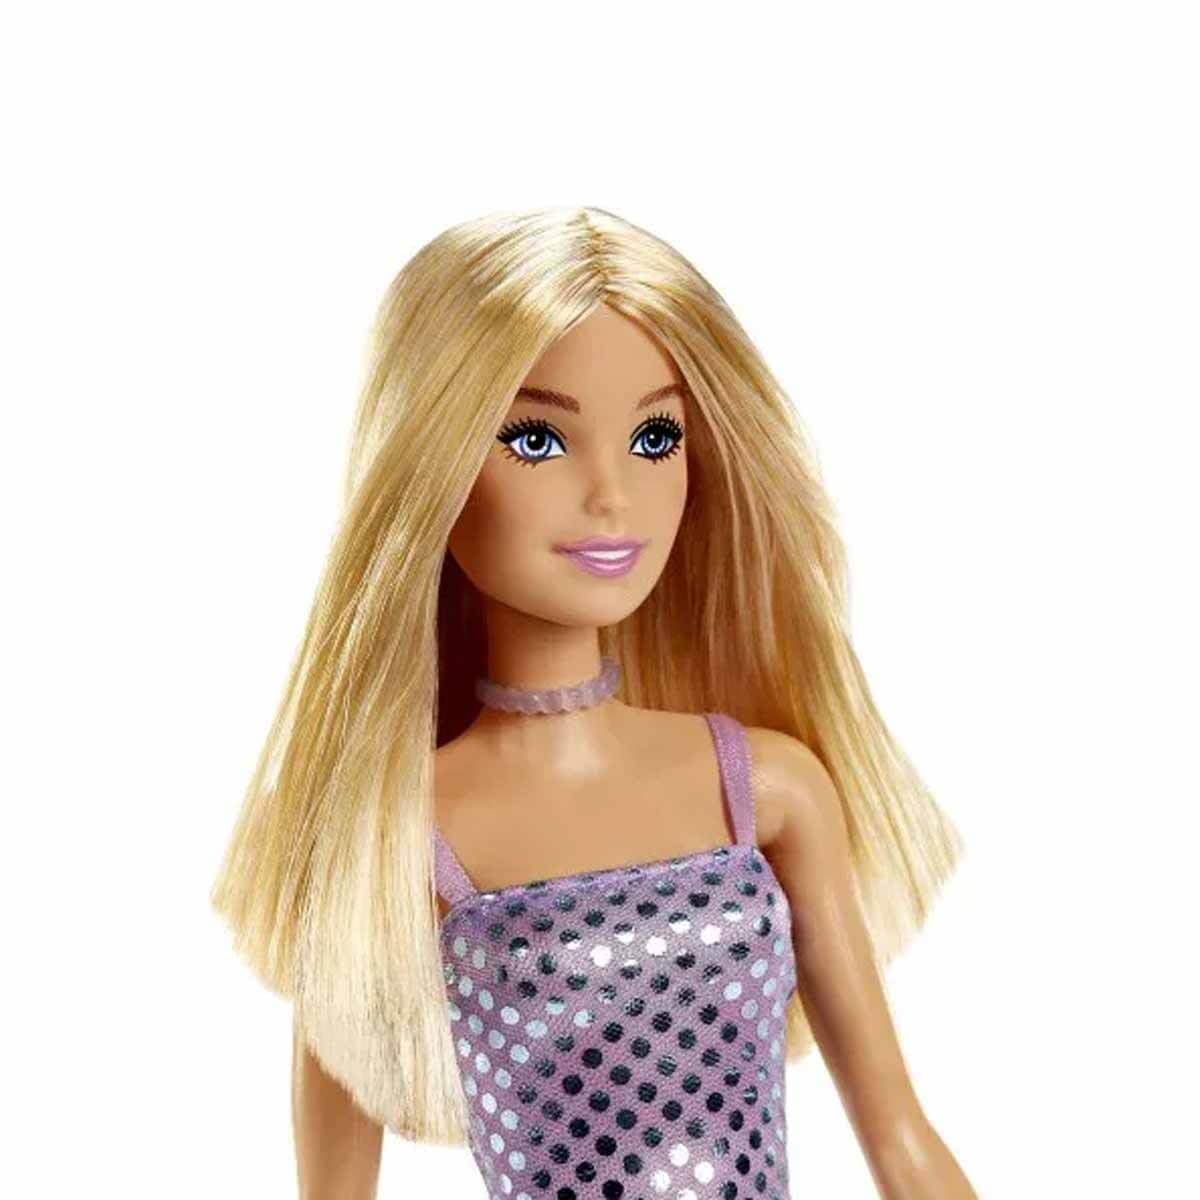 Barbie Doll in Lavender Metallic Mini Dress - Blonde Hair